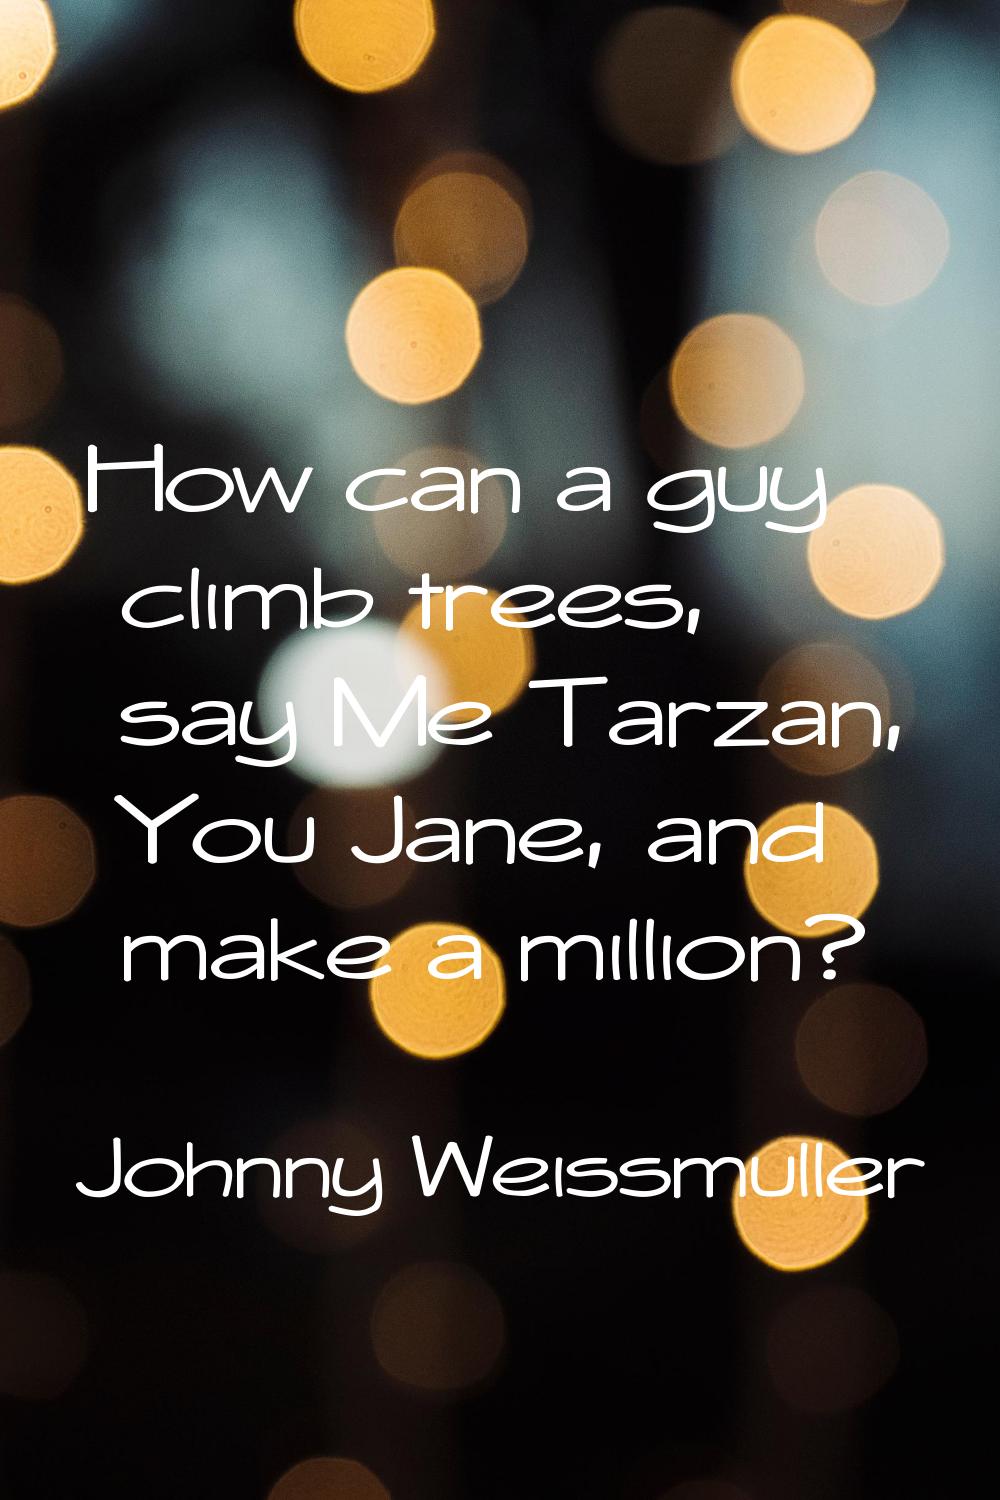 How can a guy climb trees, say Me Tarzan, You Jane, and make a million?